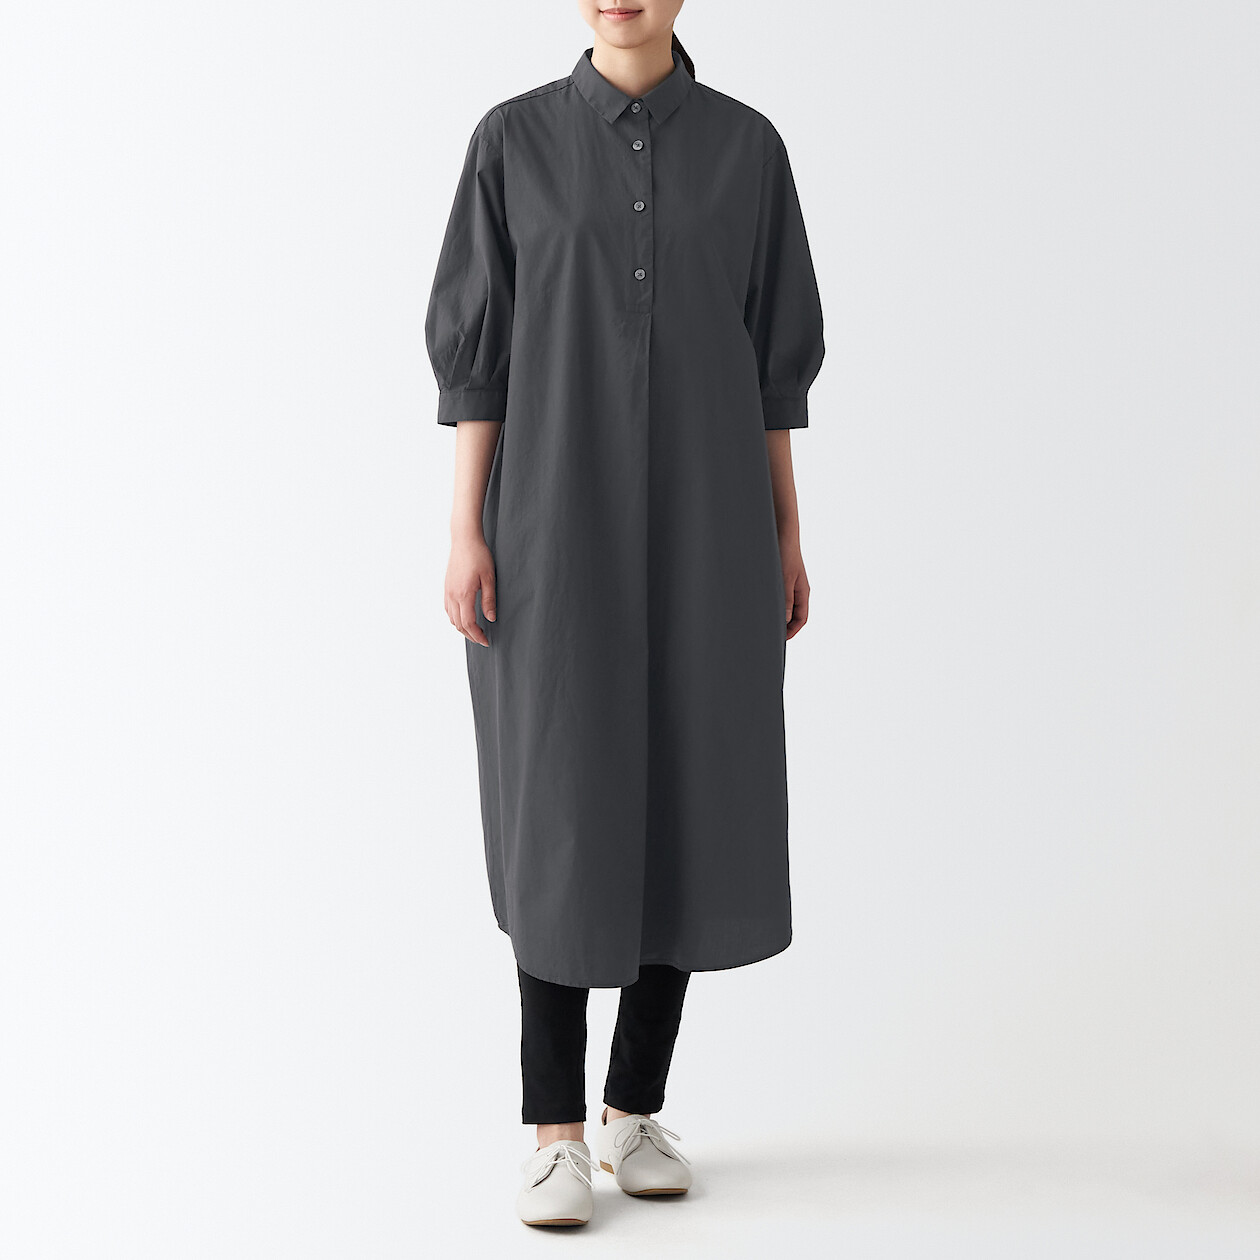 Shop Broad 3/4 Sleeve One-Piece Dress online | Muji Qatar